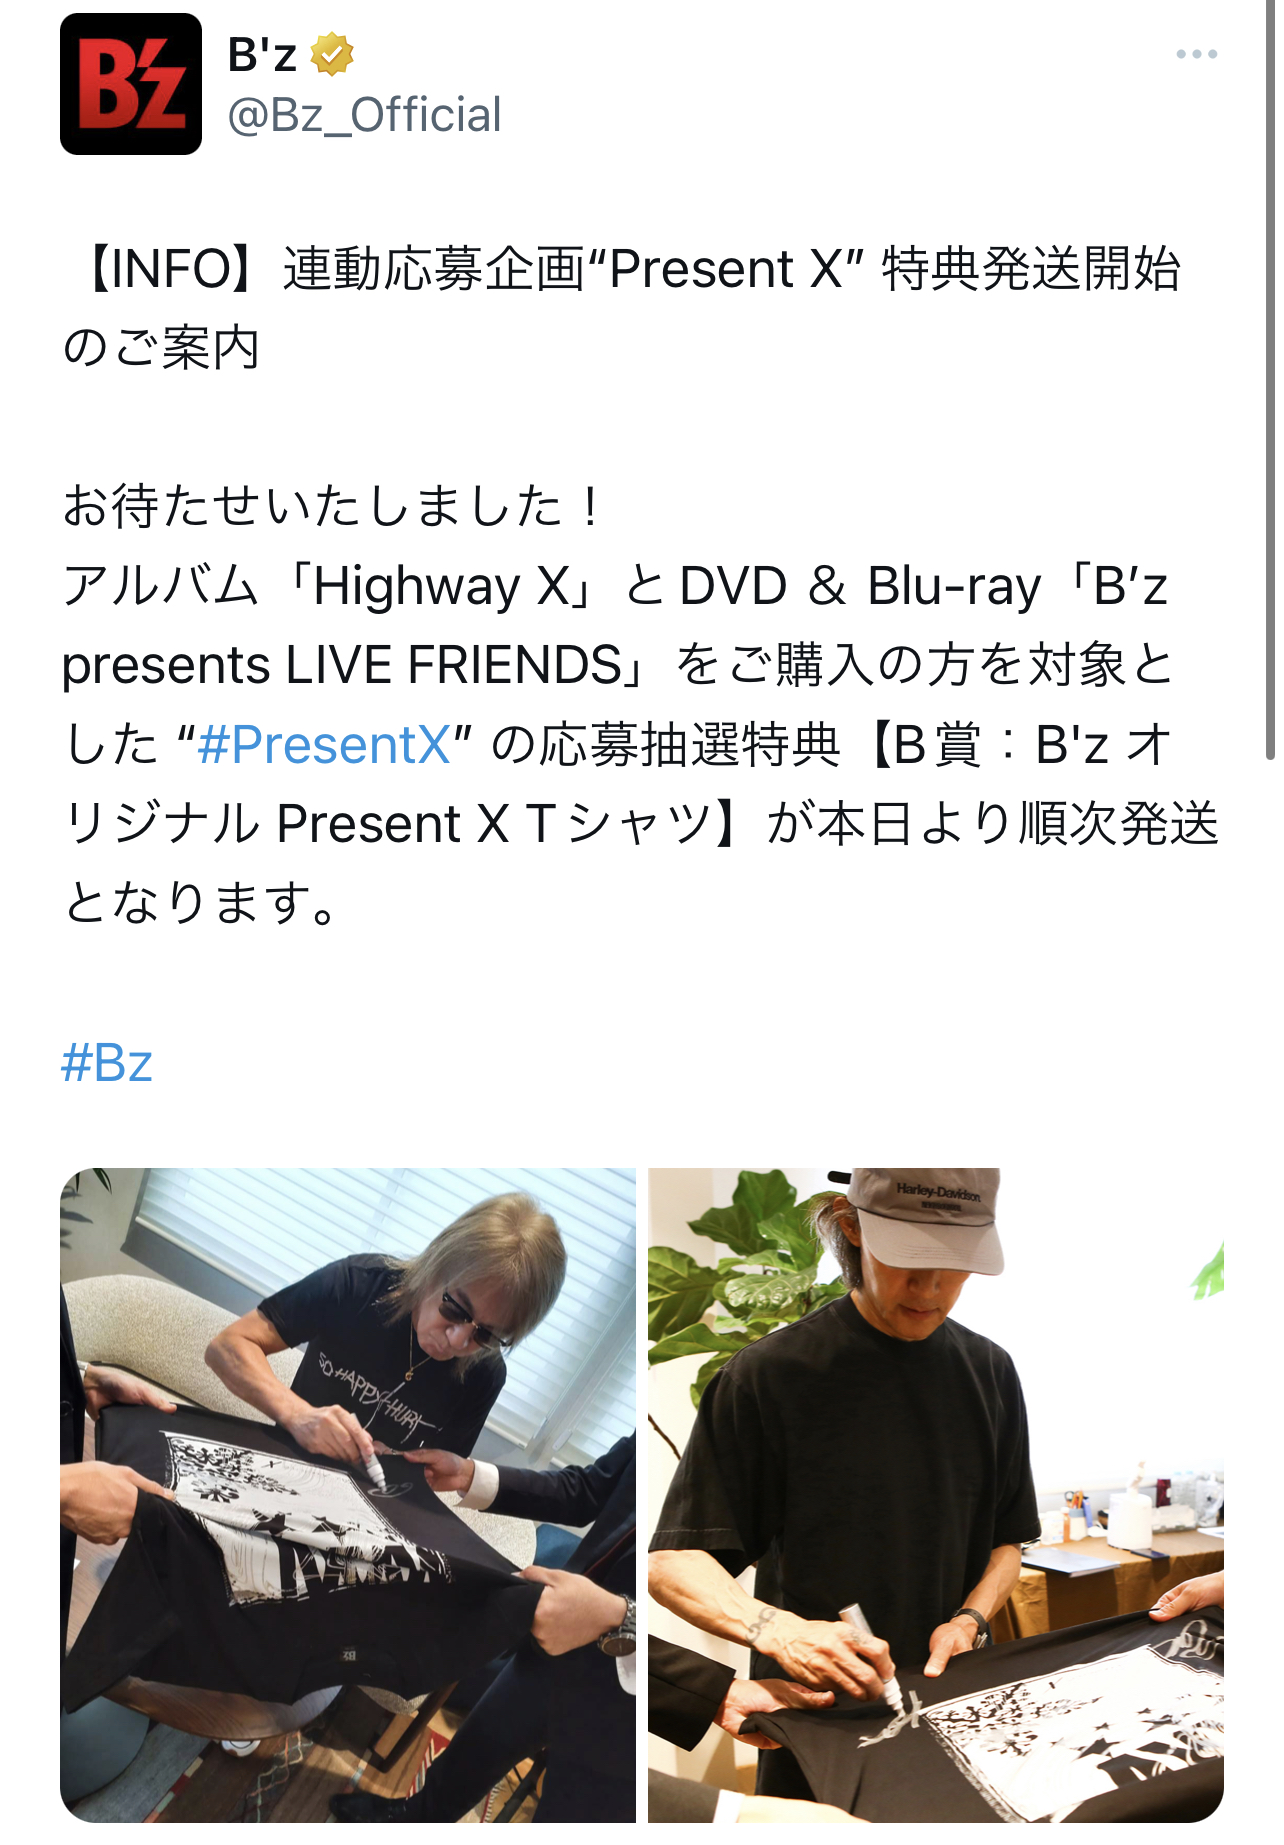 B'z「Present X」Tシャツにサインを書き入れる松本孝弘と稲葉浩志の様子